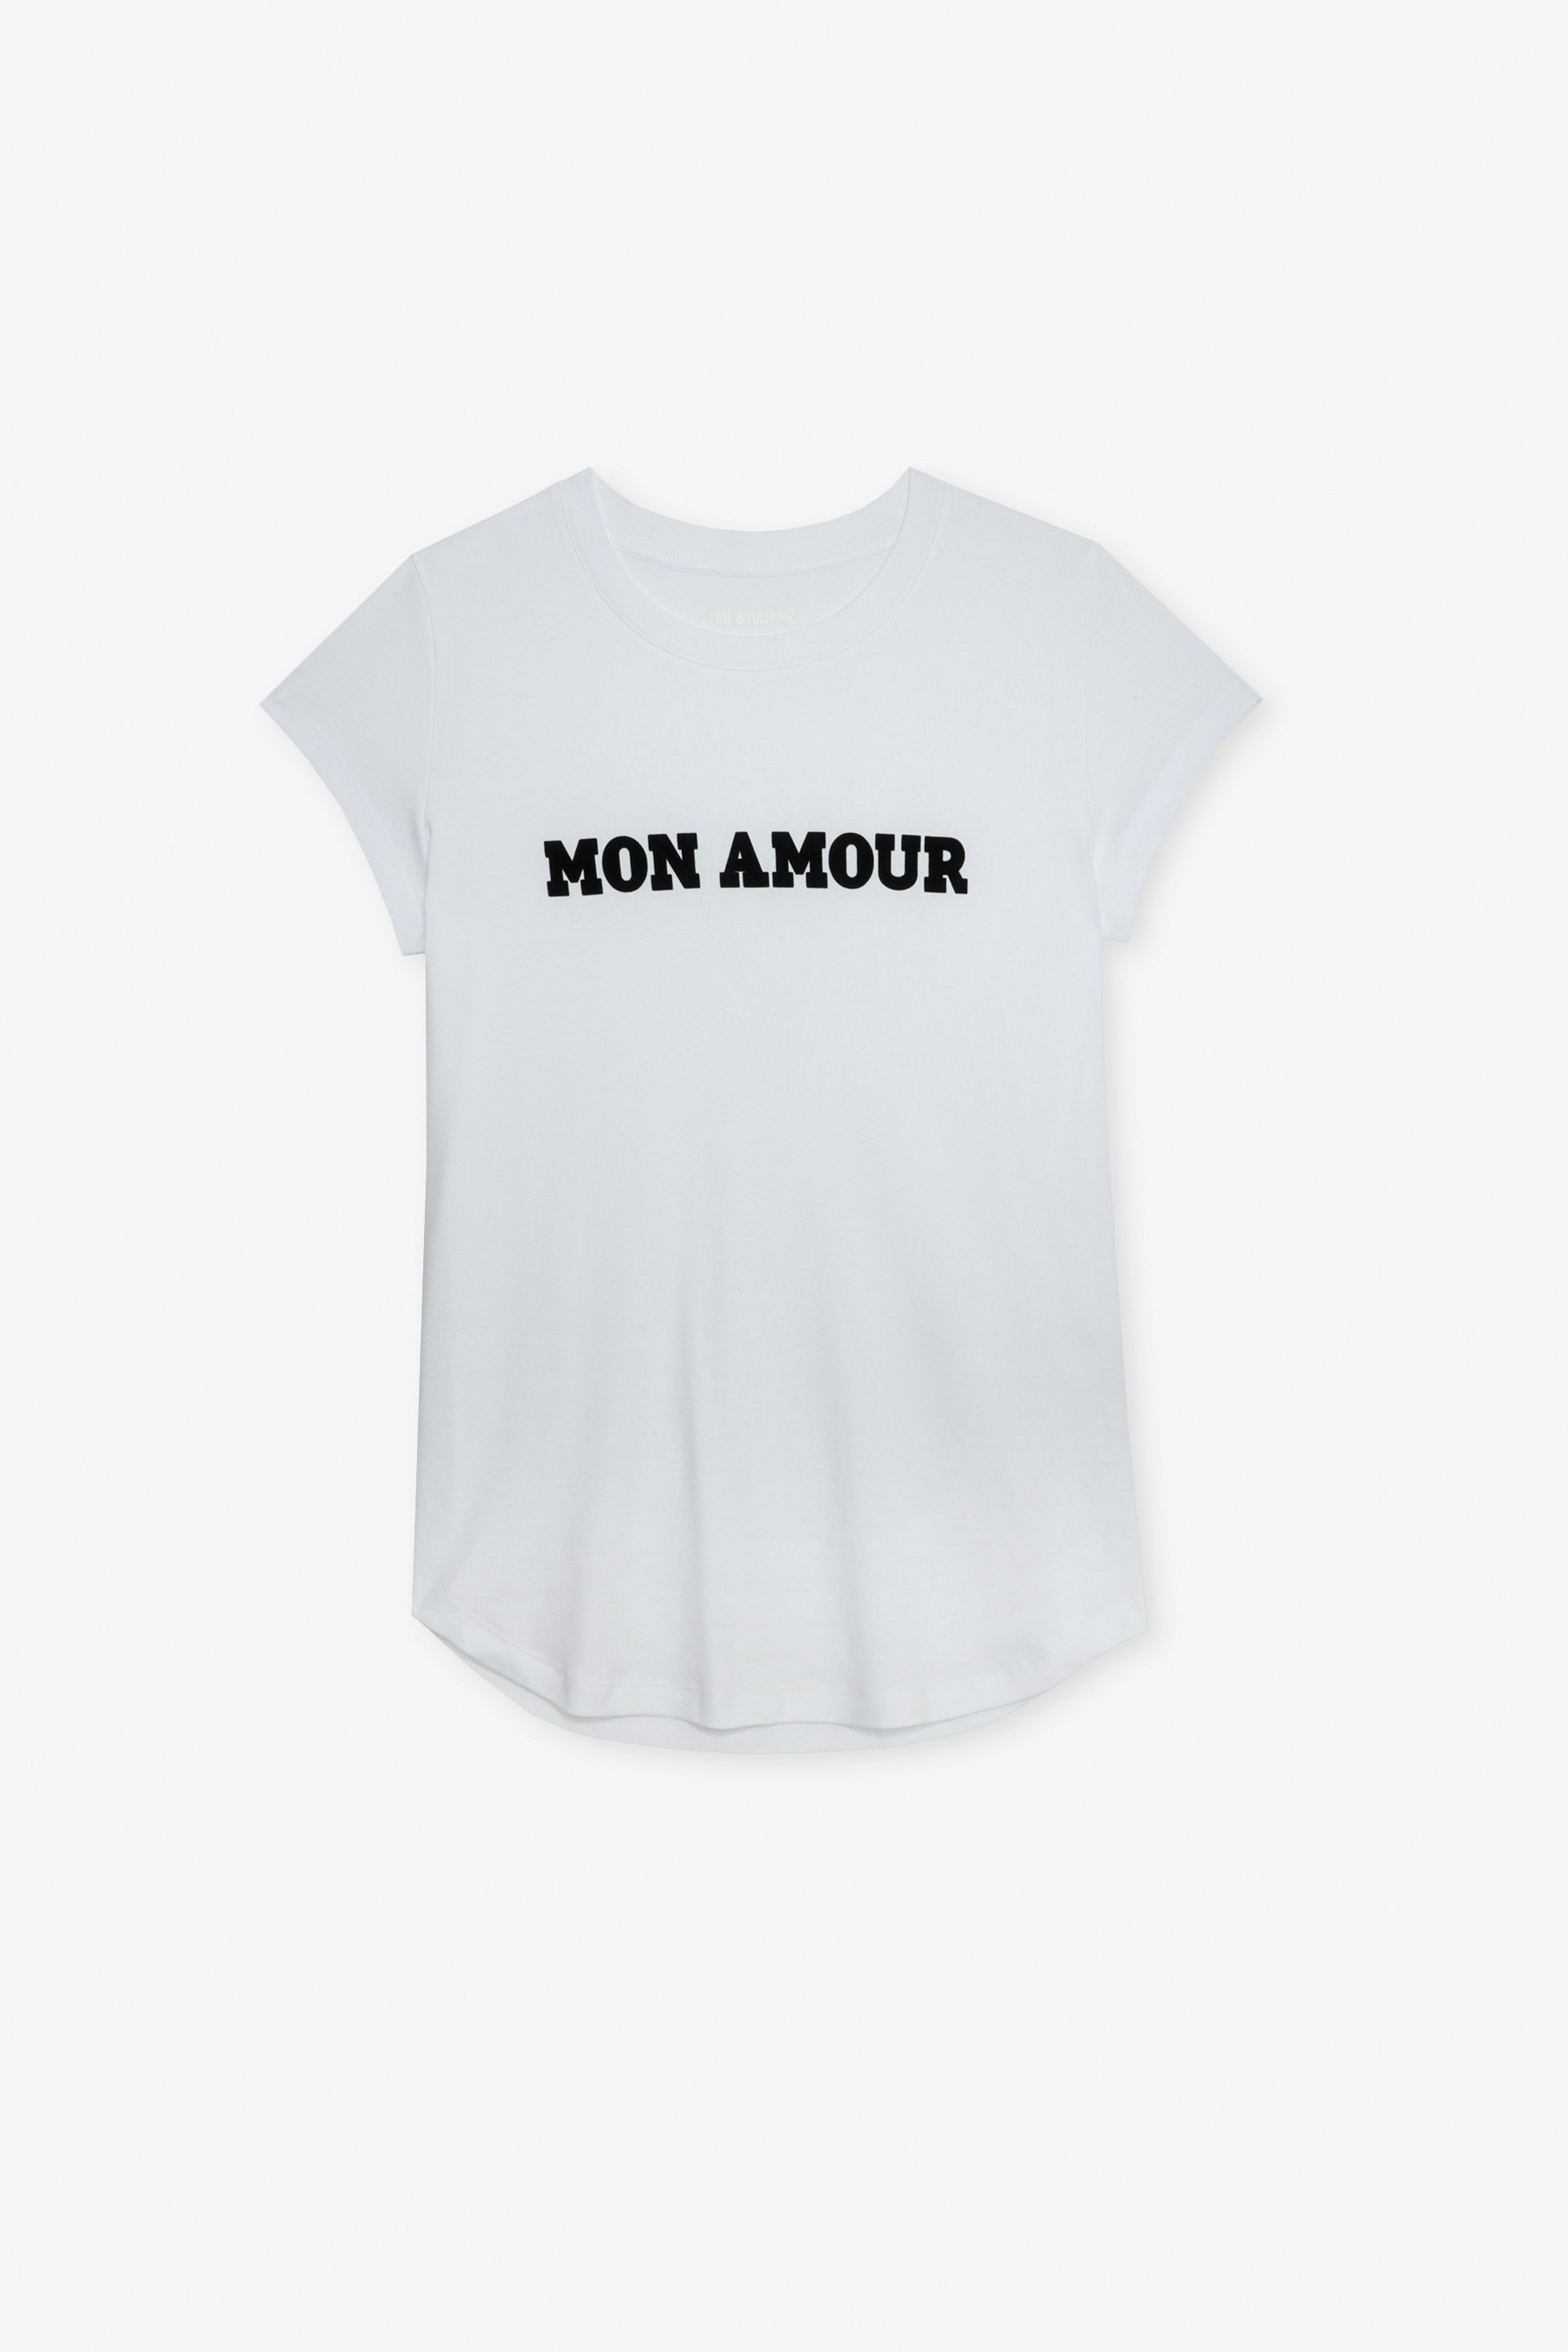 T-shirt Woop Mon Amour - T-shirt da donna in cotone bianco con scritta "Mon amour".